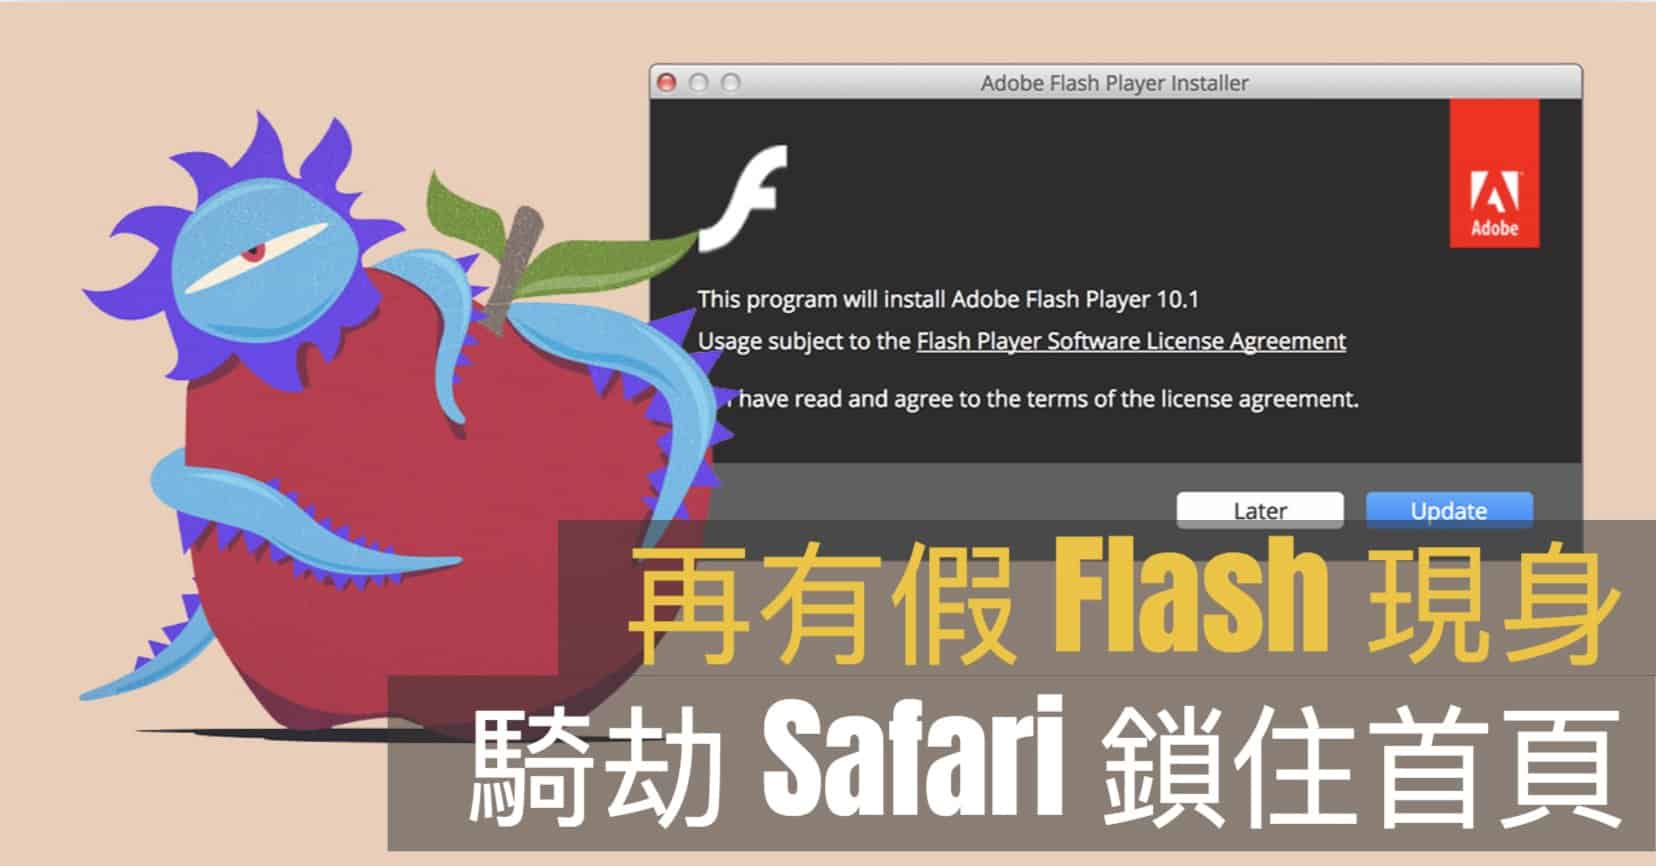 fake flash player installer can lock safari homepage setting 00